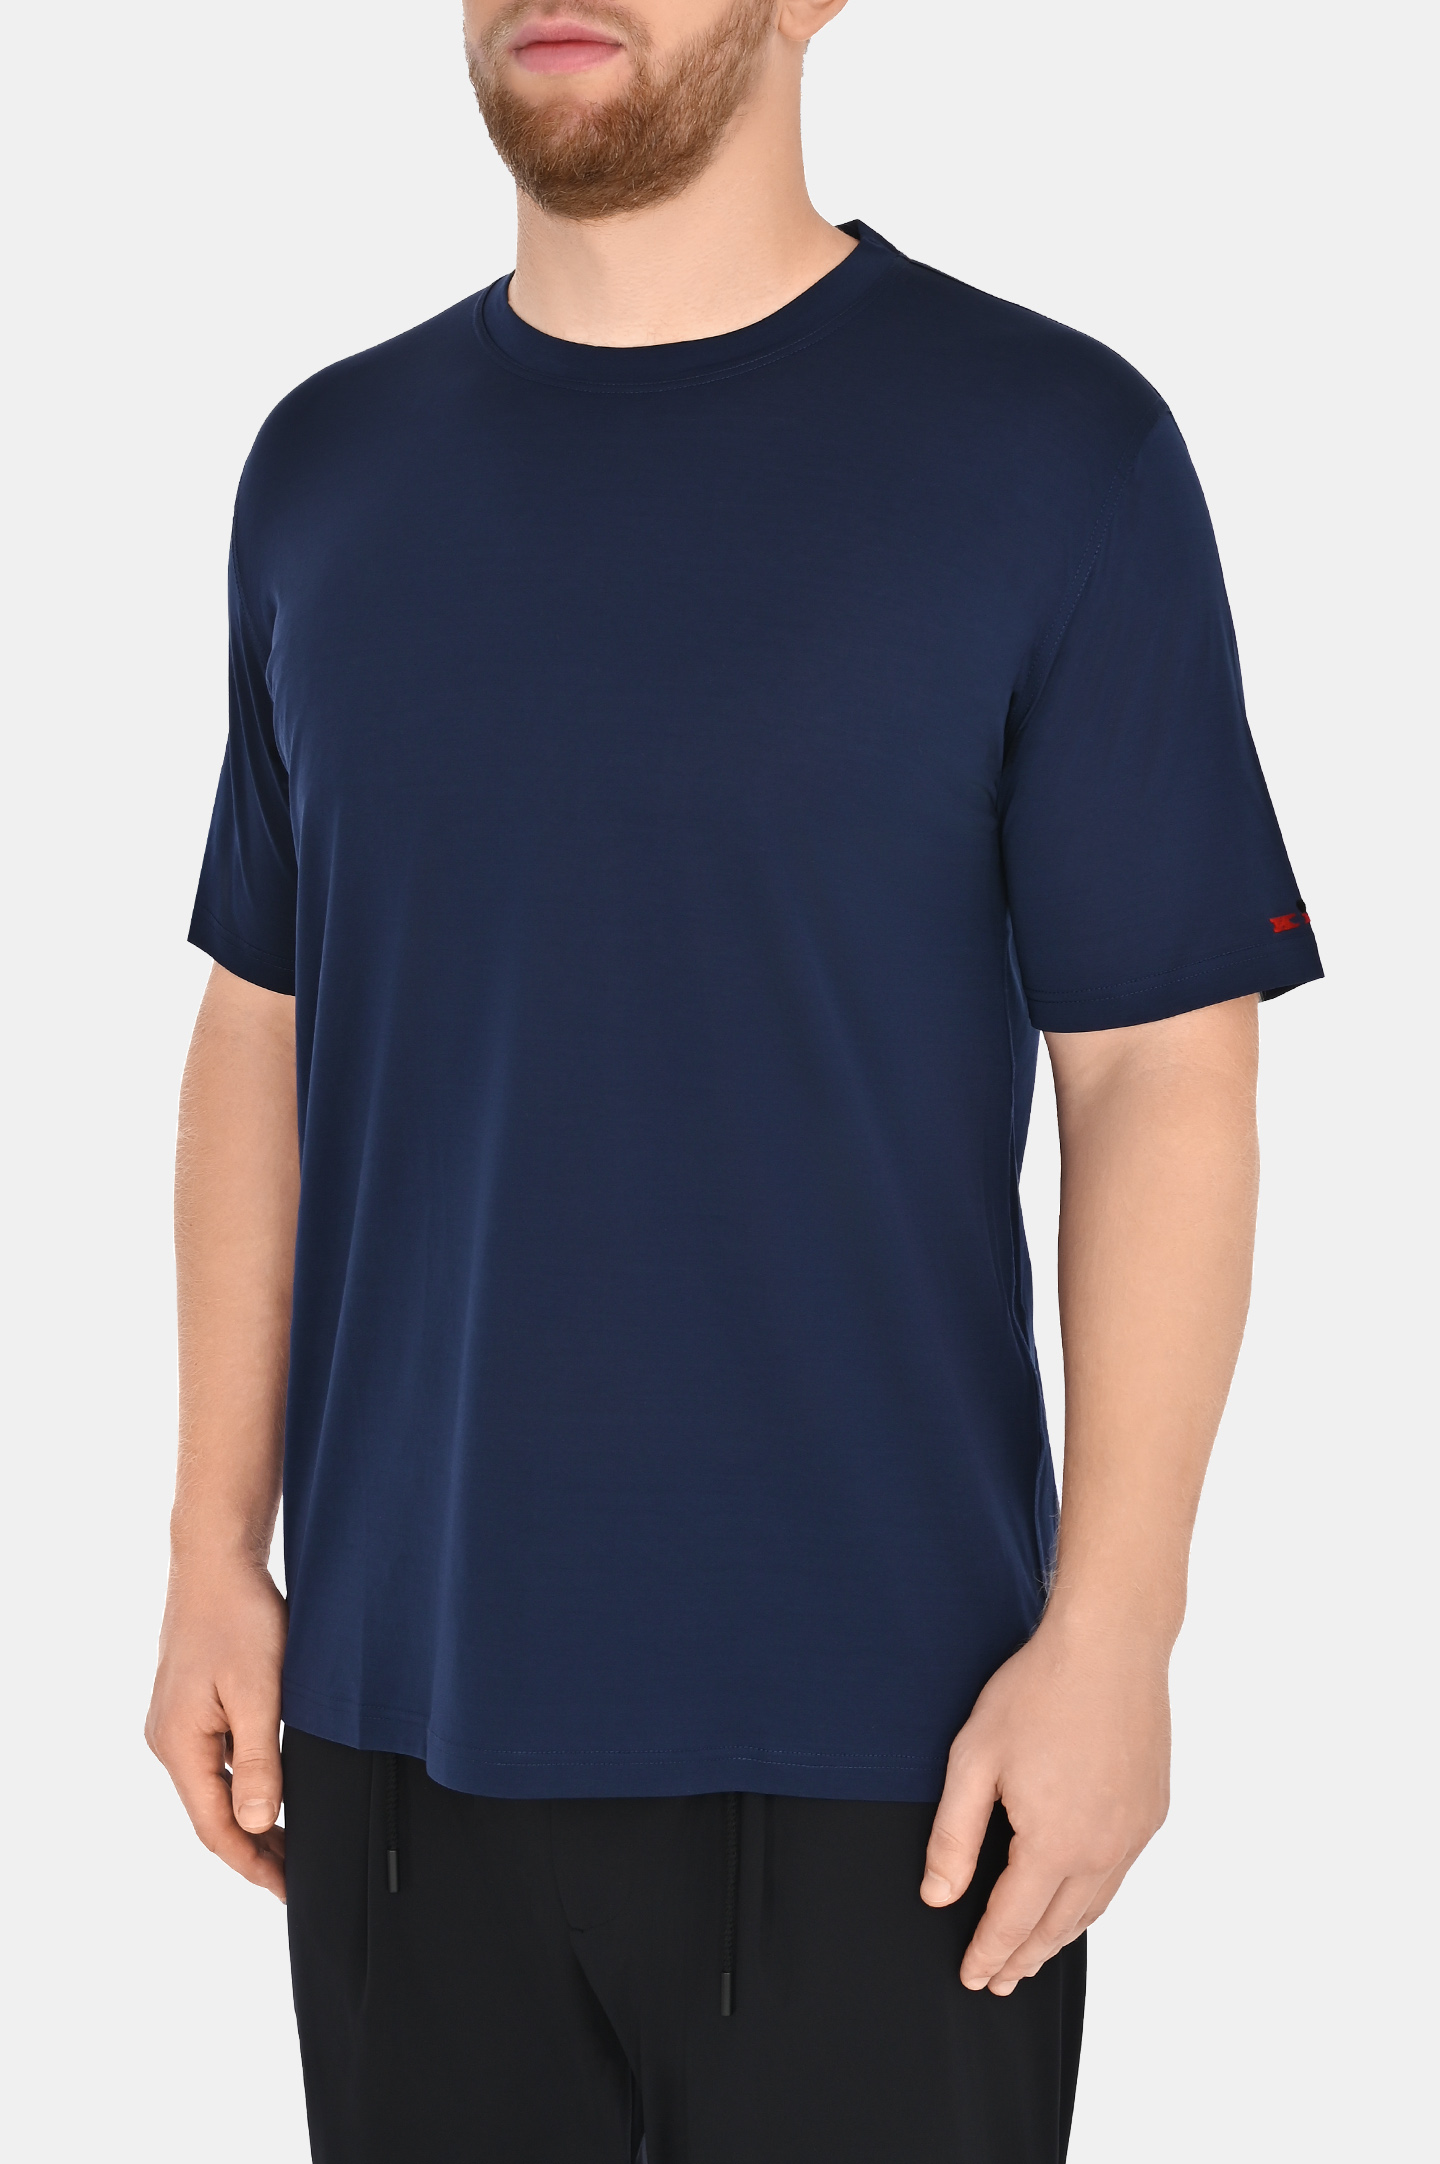 Хлопковая базовая футболка KITON UMK1165769, цвет: Темно-синий, Мужской